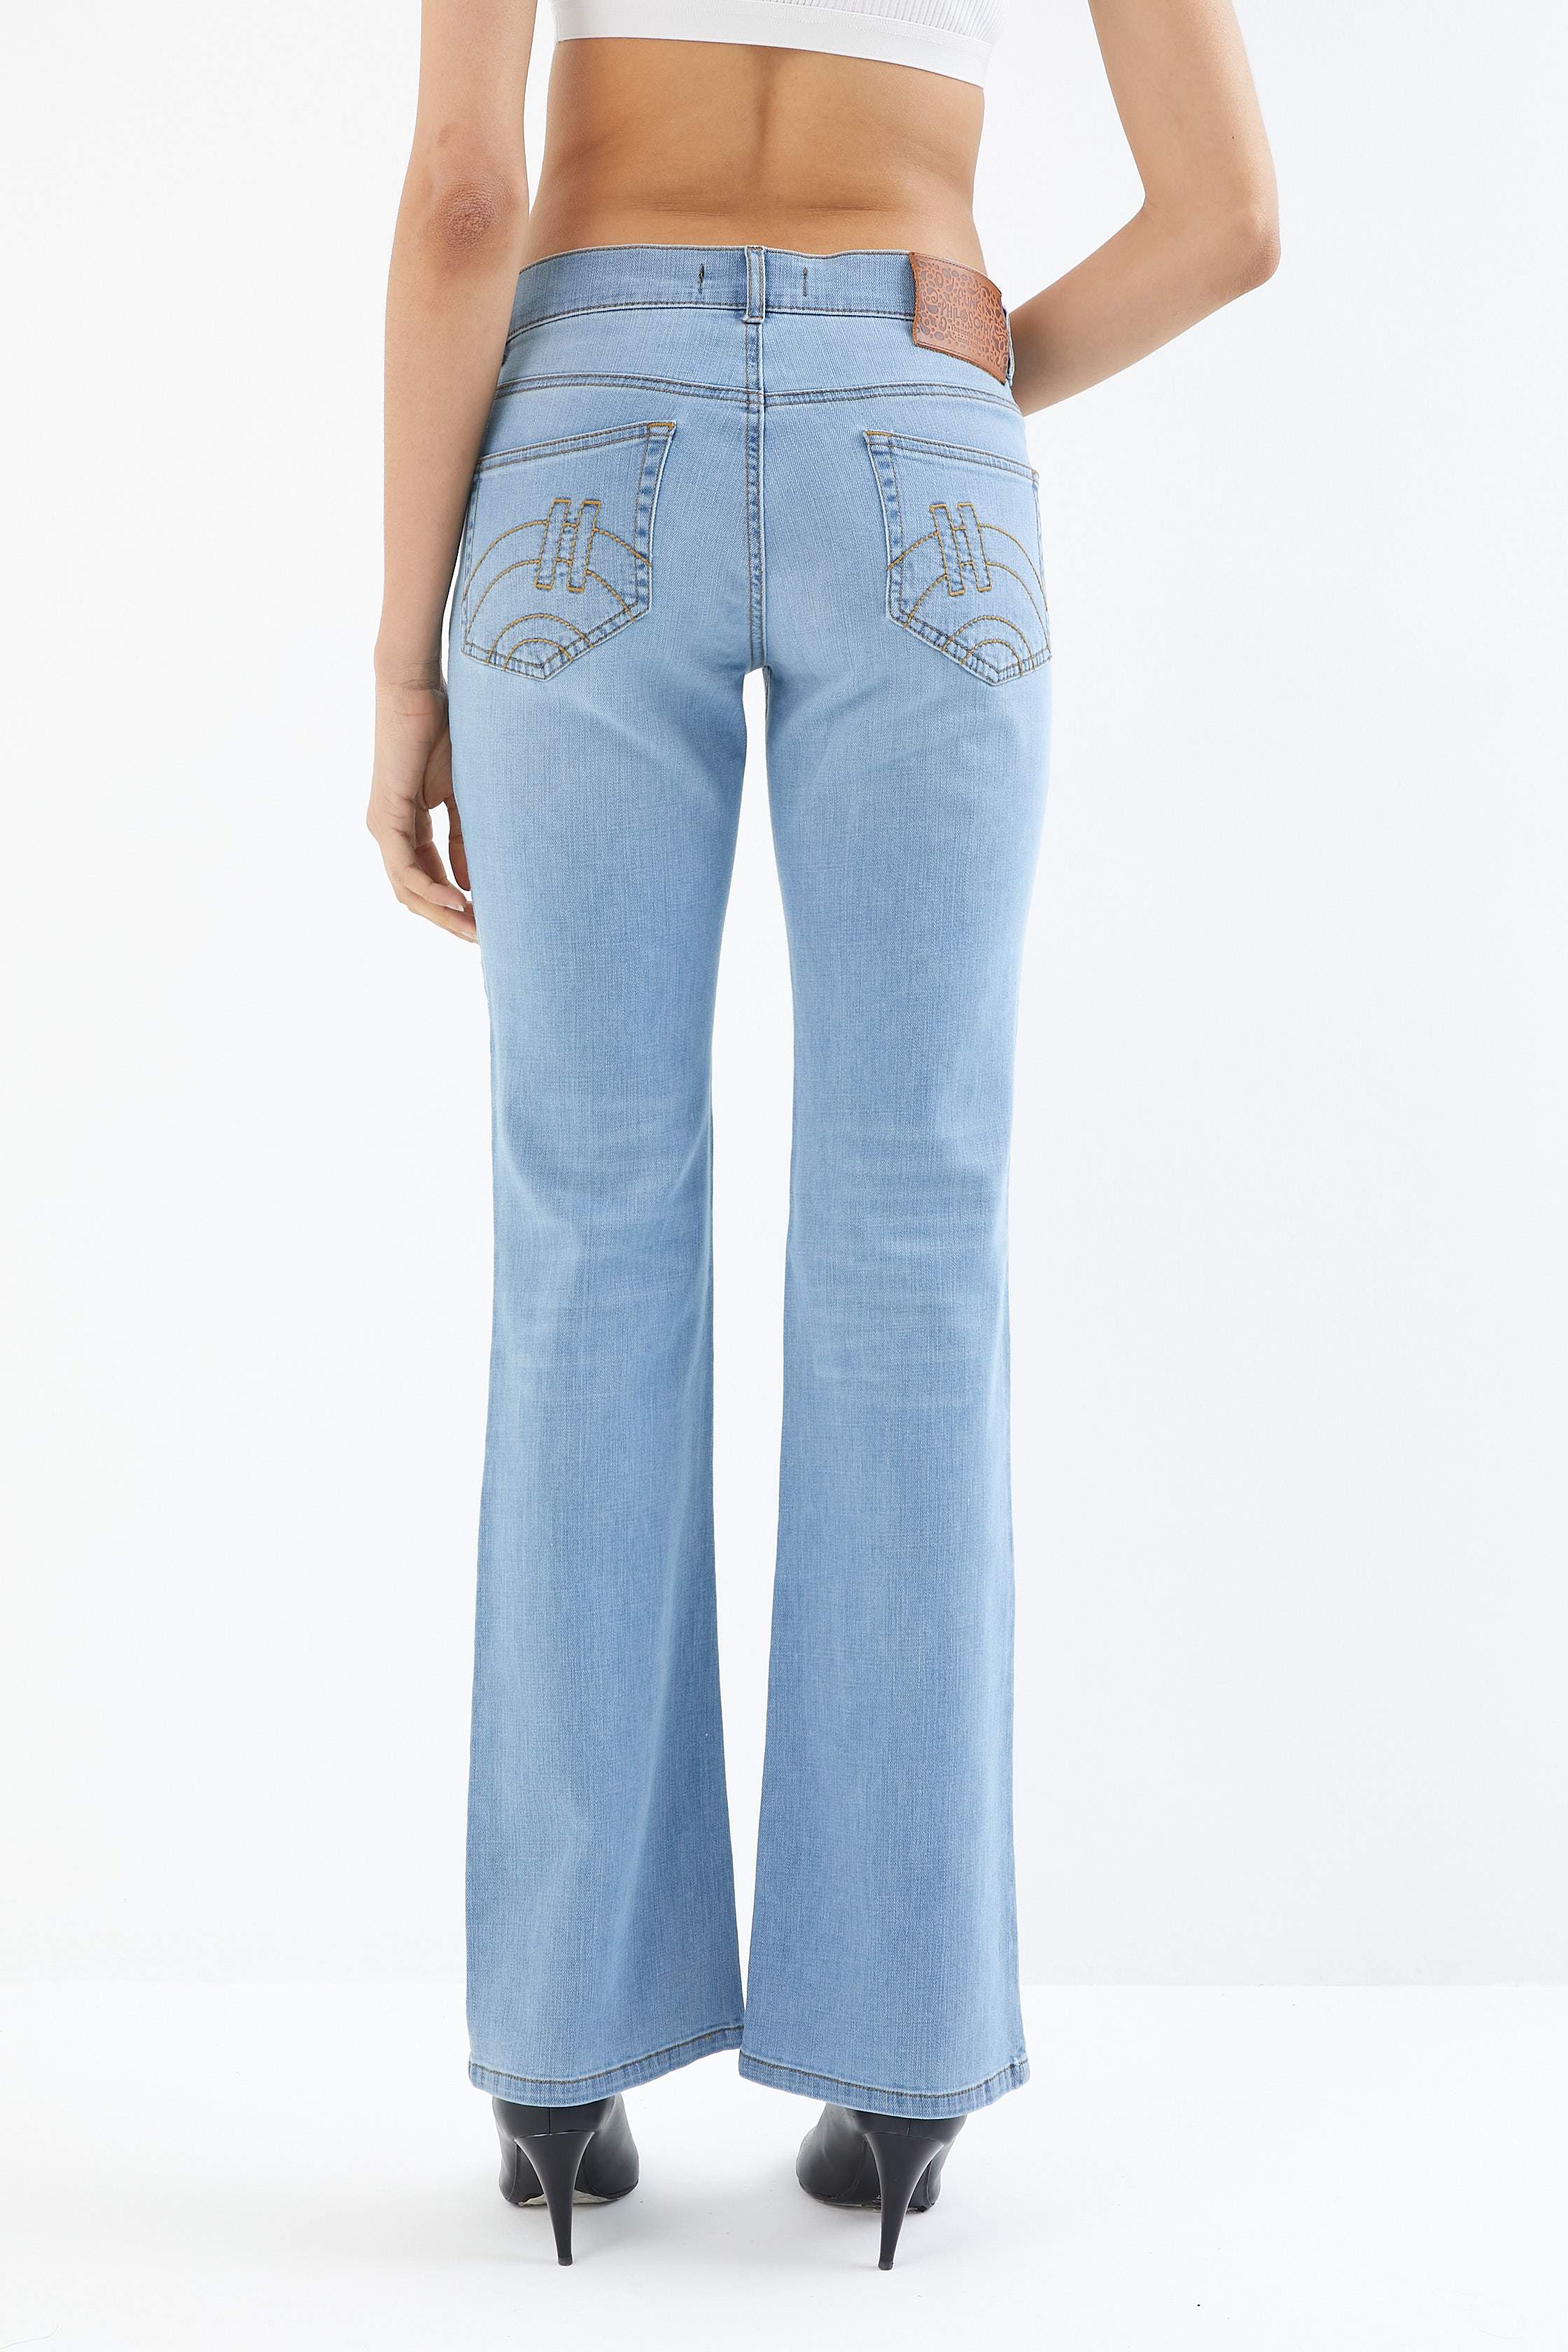 Wide-leg Ripped Light Blue Jeans 4031